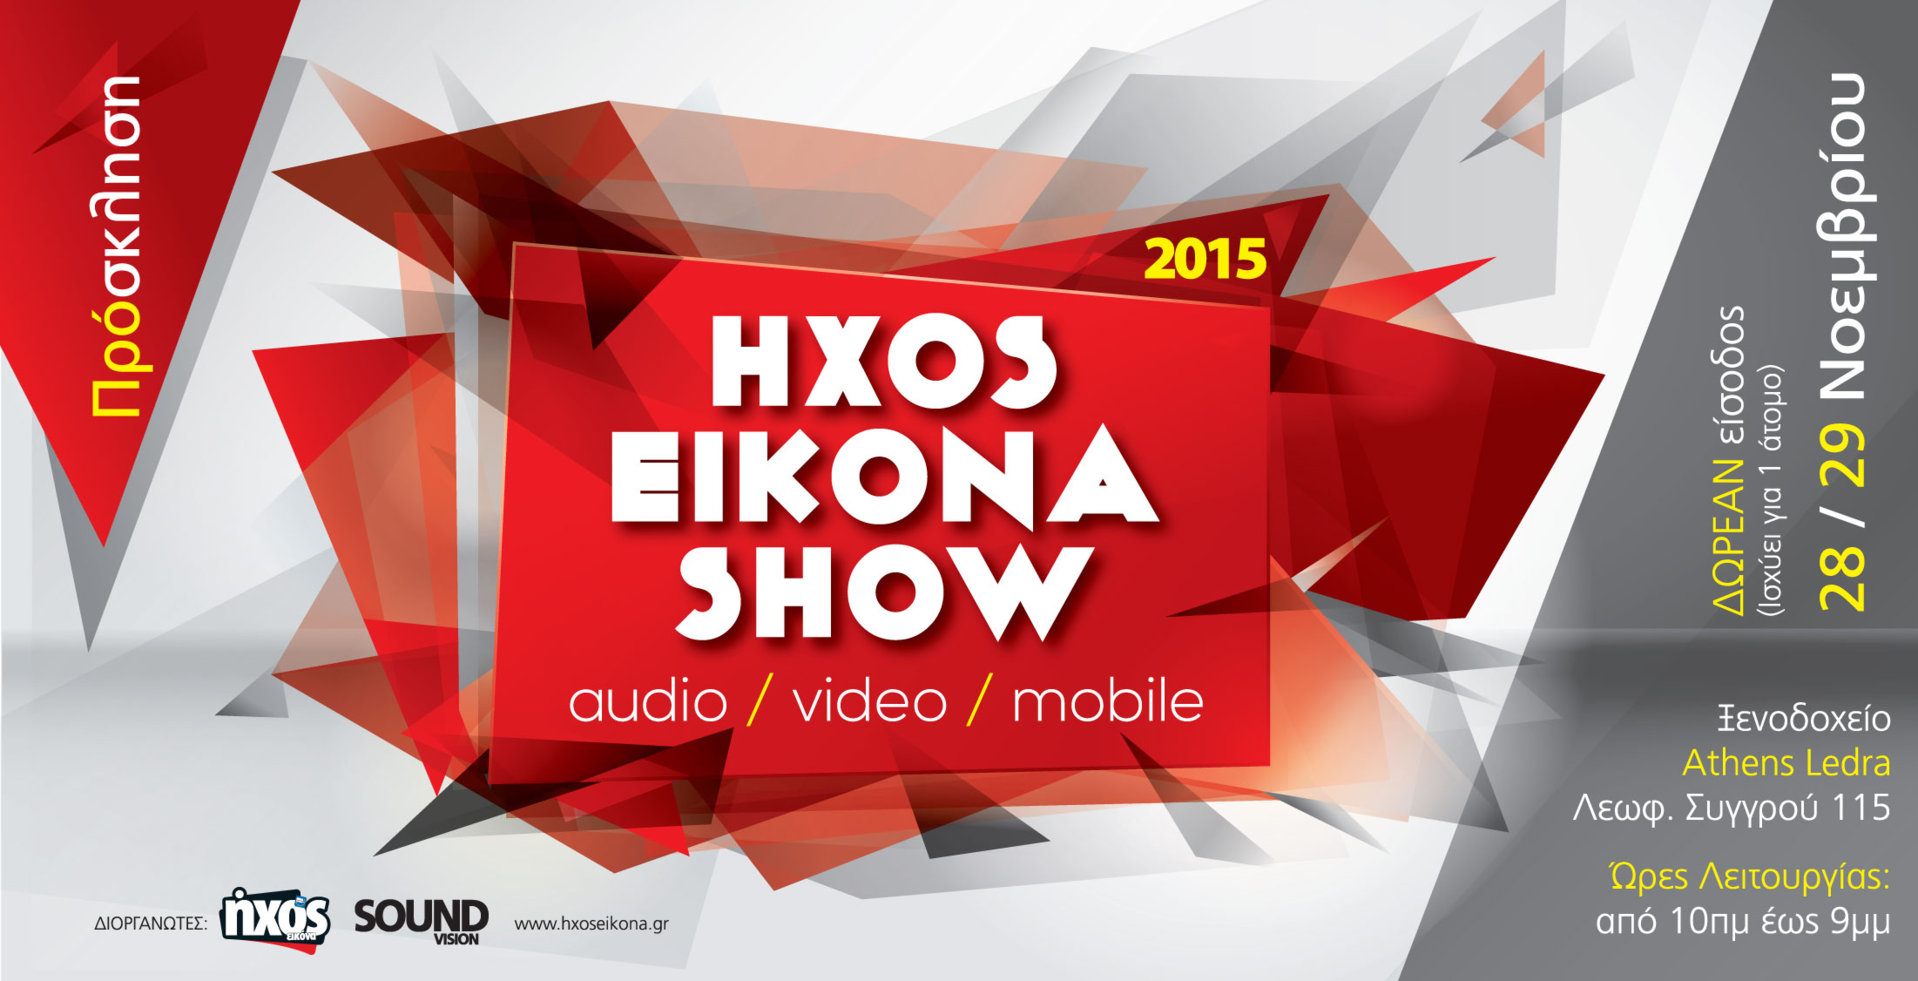 HxosEikonaShow15_PROSKLISI.jpg